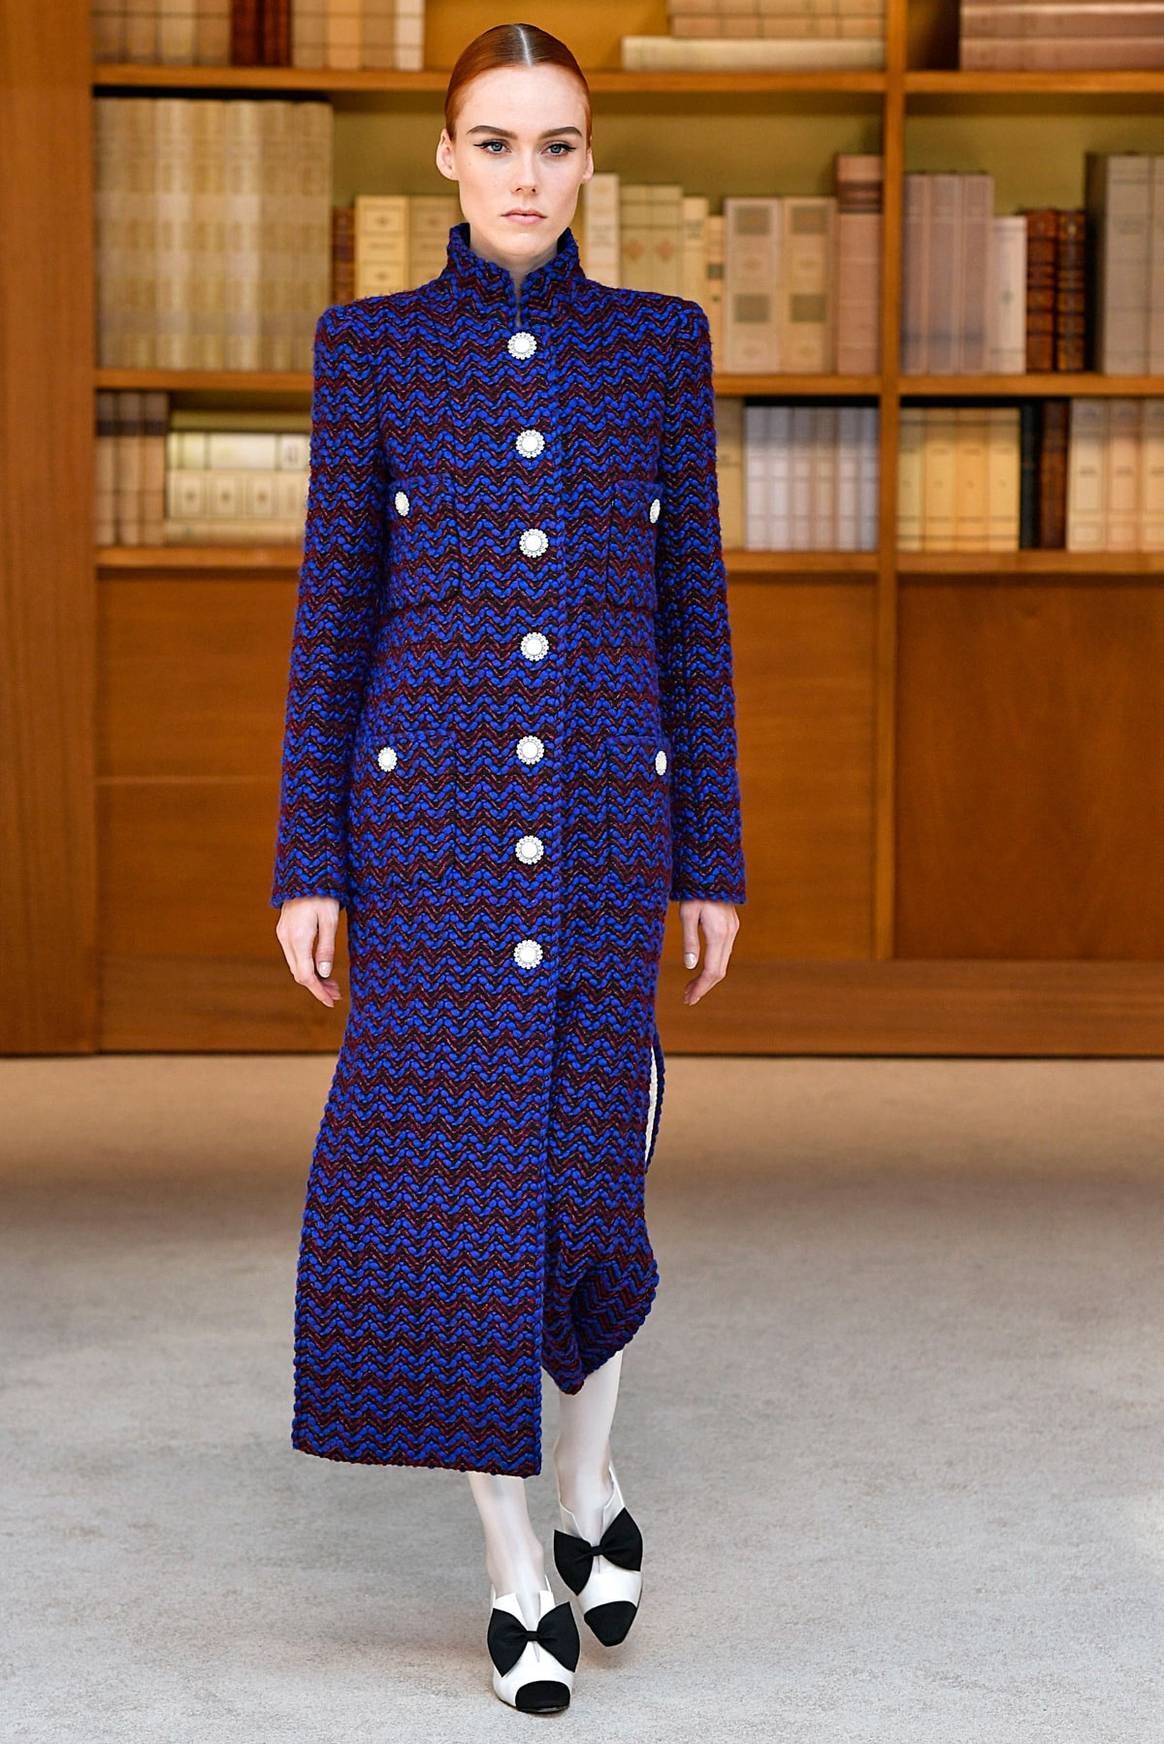 Chanel's Virginie Viard unveils couture debut in Paris